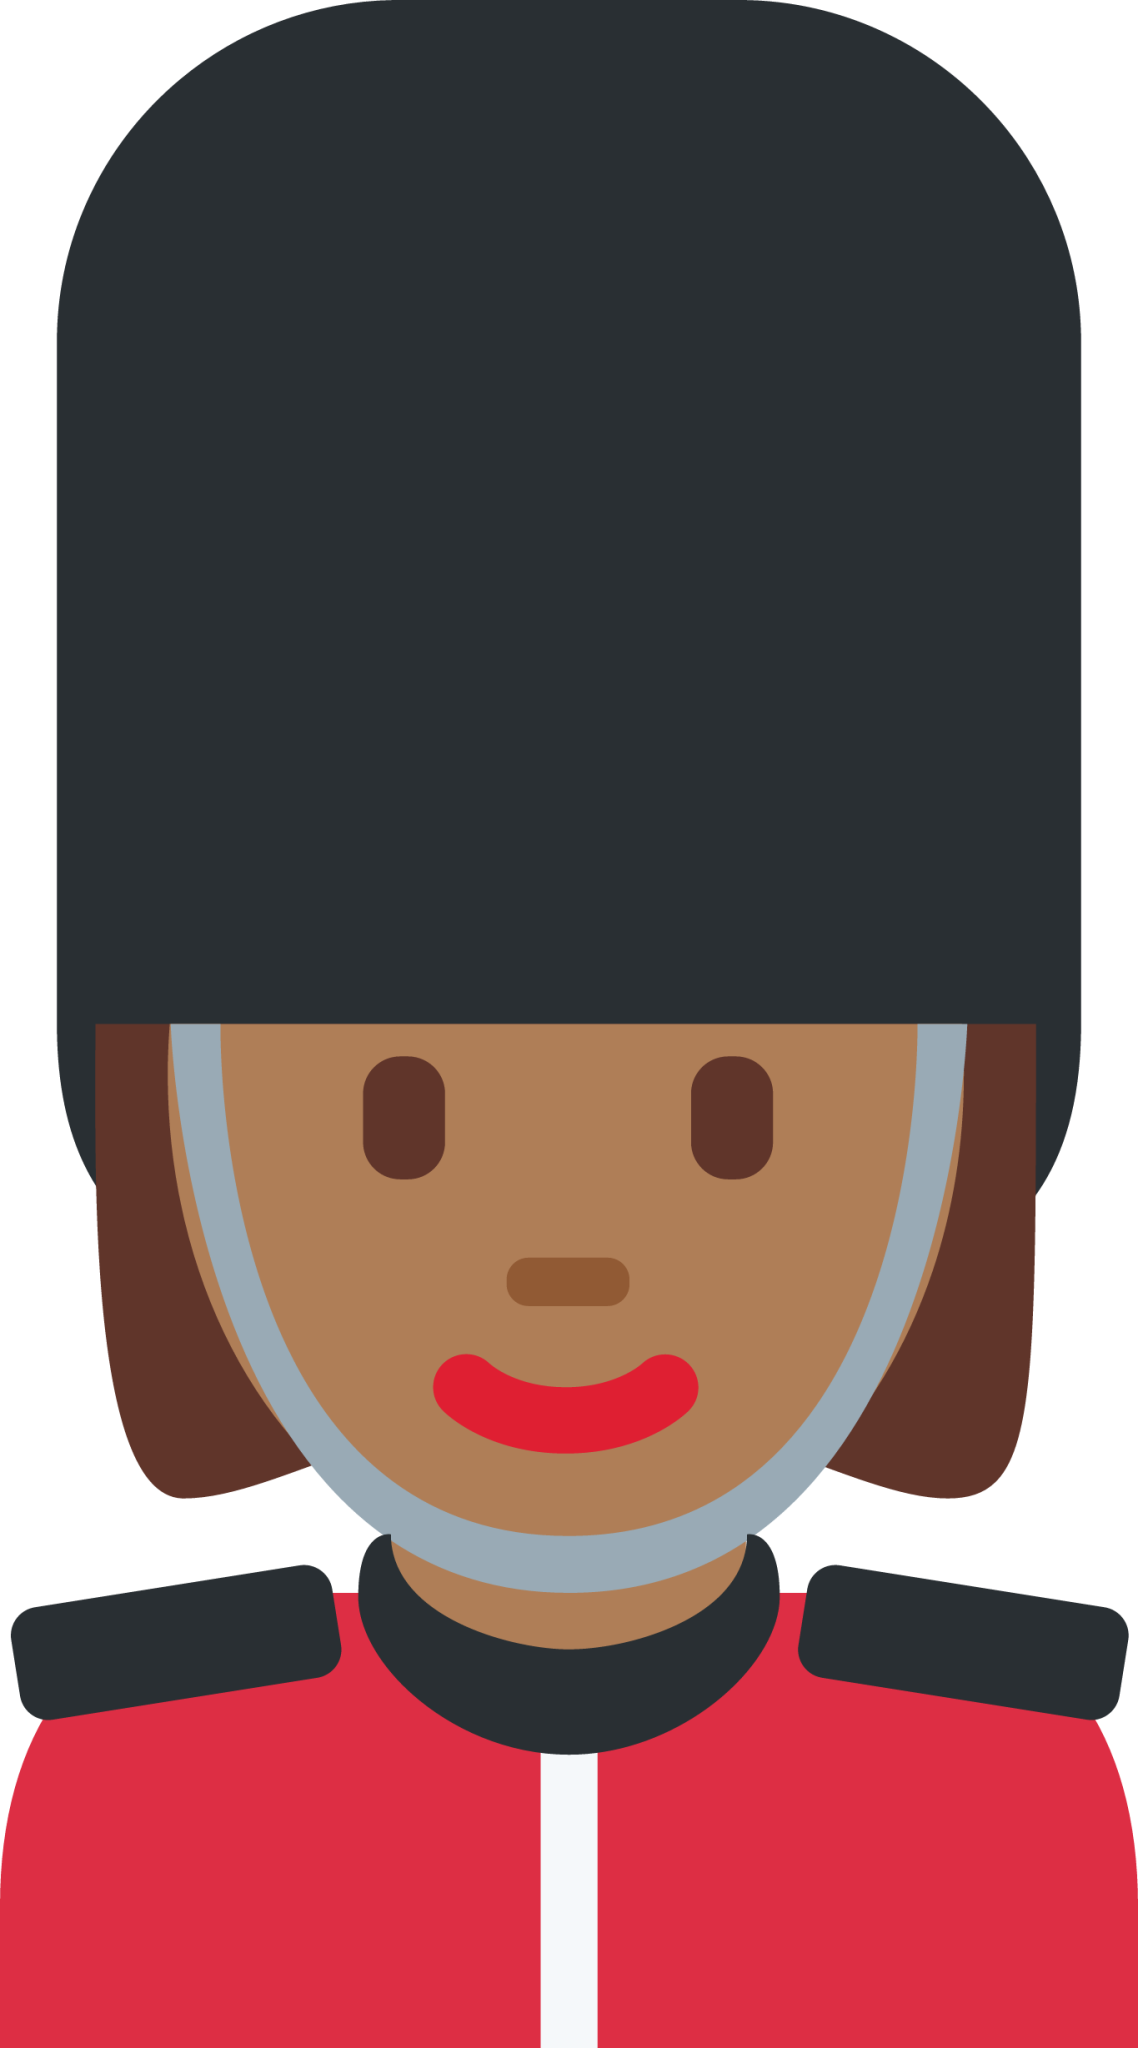 woman guard: medium-dark skin tone emoji